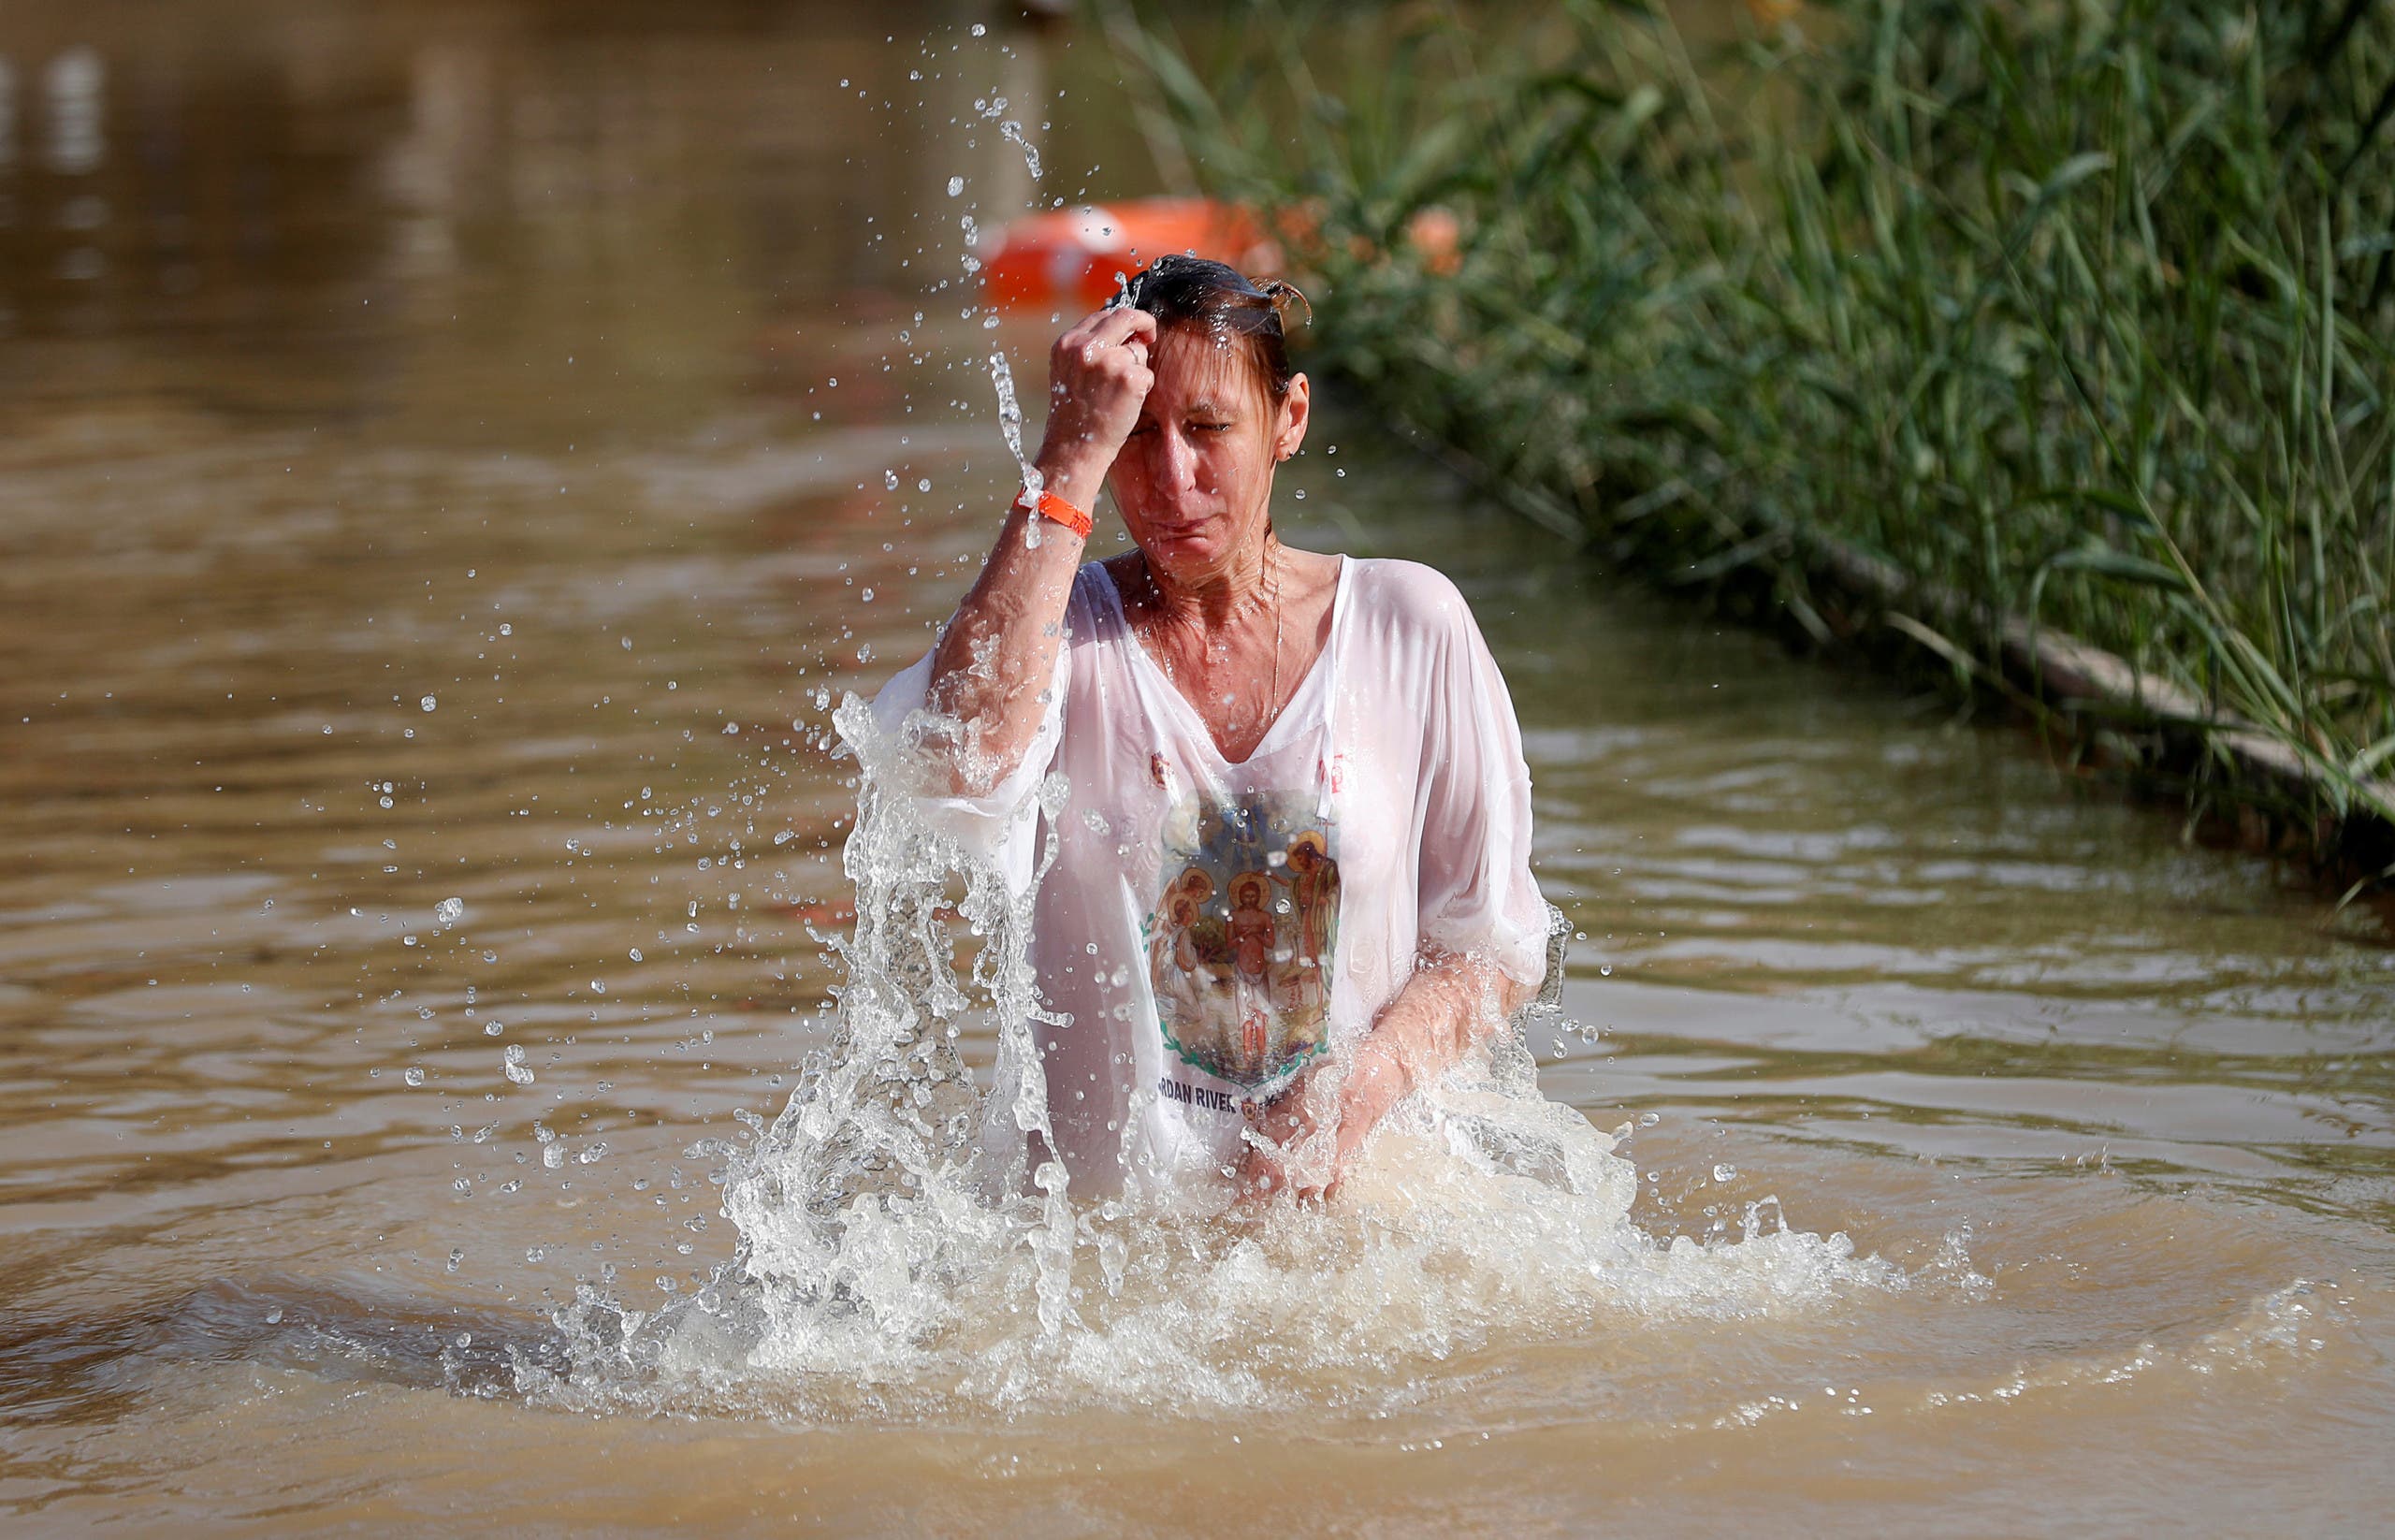 Купания страна. Крещение Господне в реке Иордан. Река Иордан крещение. Крещение в реке Иордан женщины. Купание в реке Иордан.